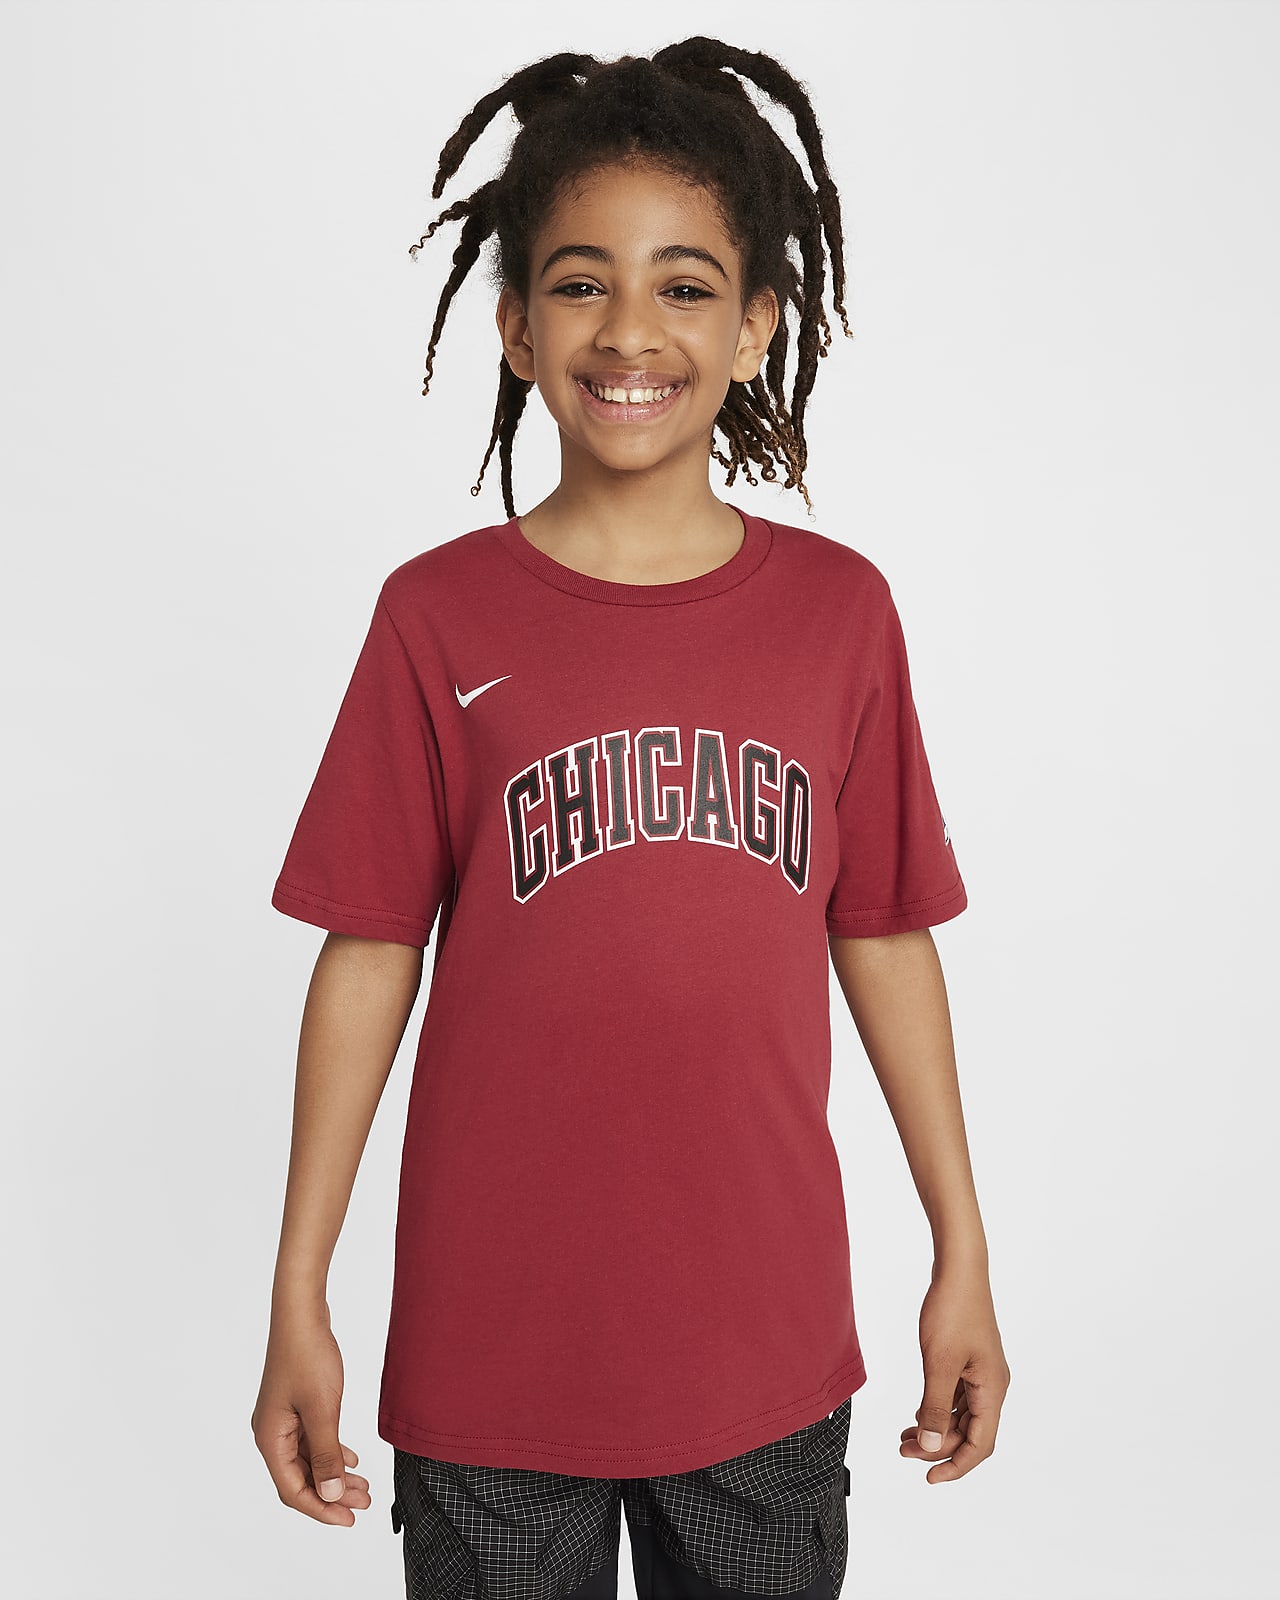 Chicago Bulls City Edition Camiseta con logotipo Nike de la NBA - Niño/a